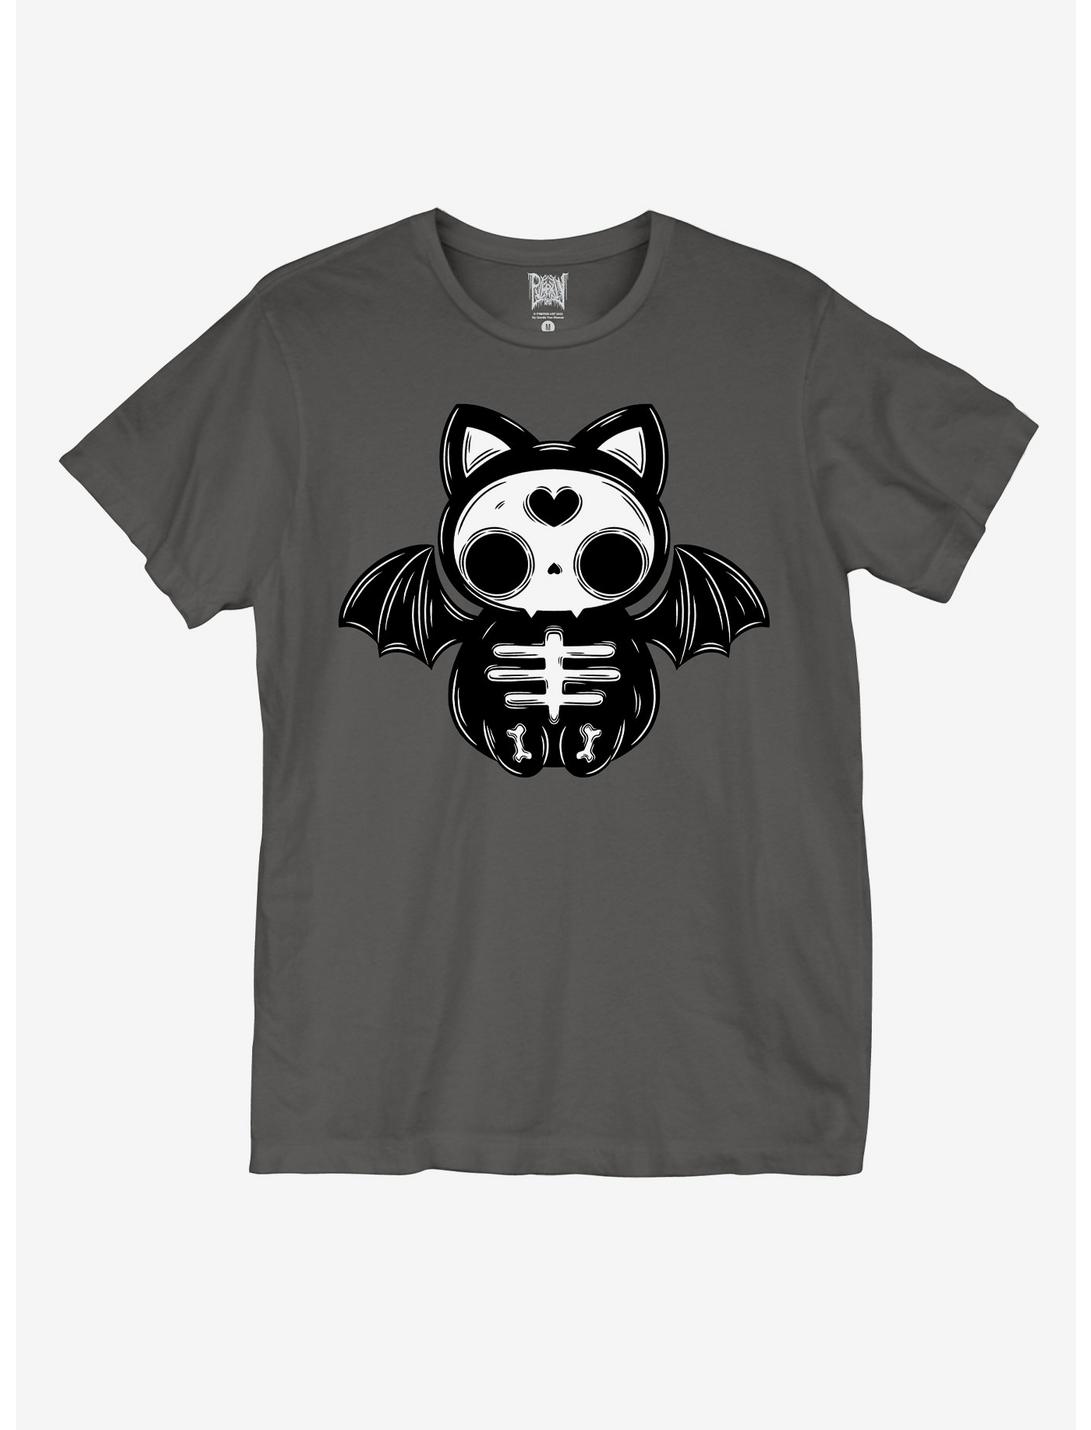 Bat Kitty T-Shirt By Pvmpkin Art, GREY, hi-res